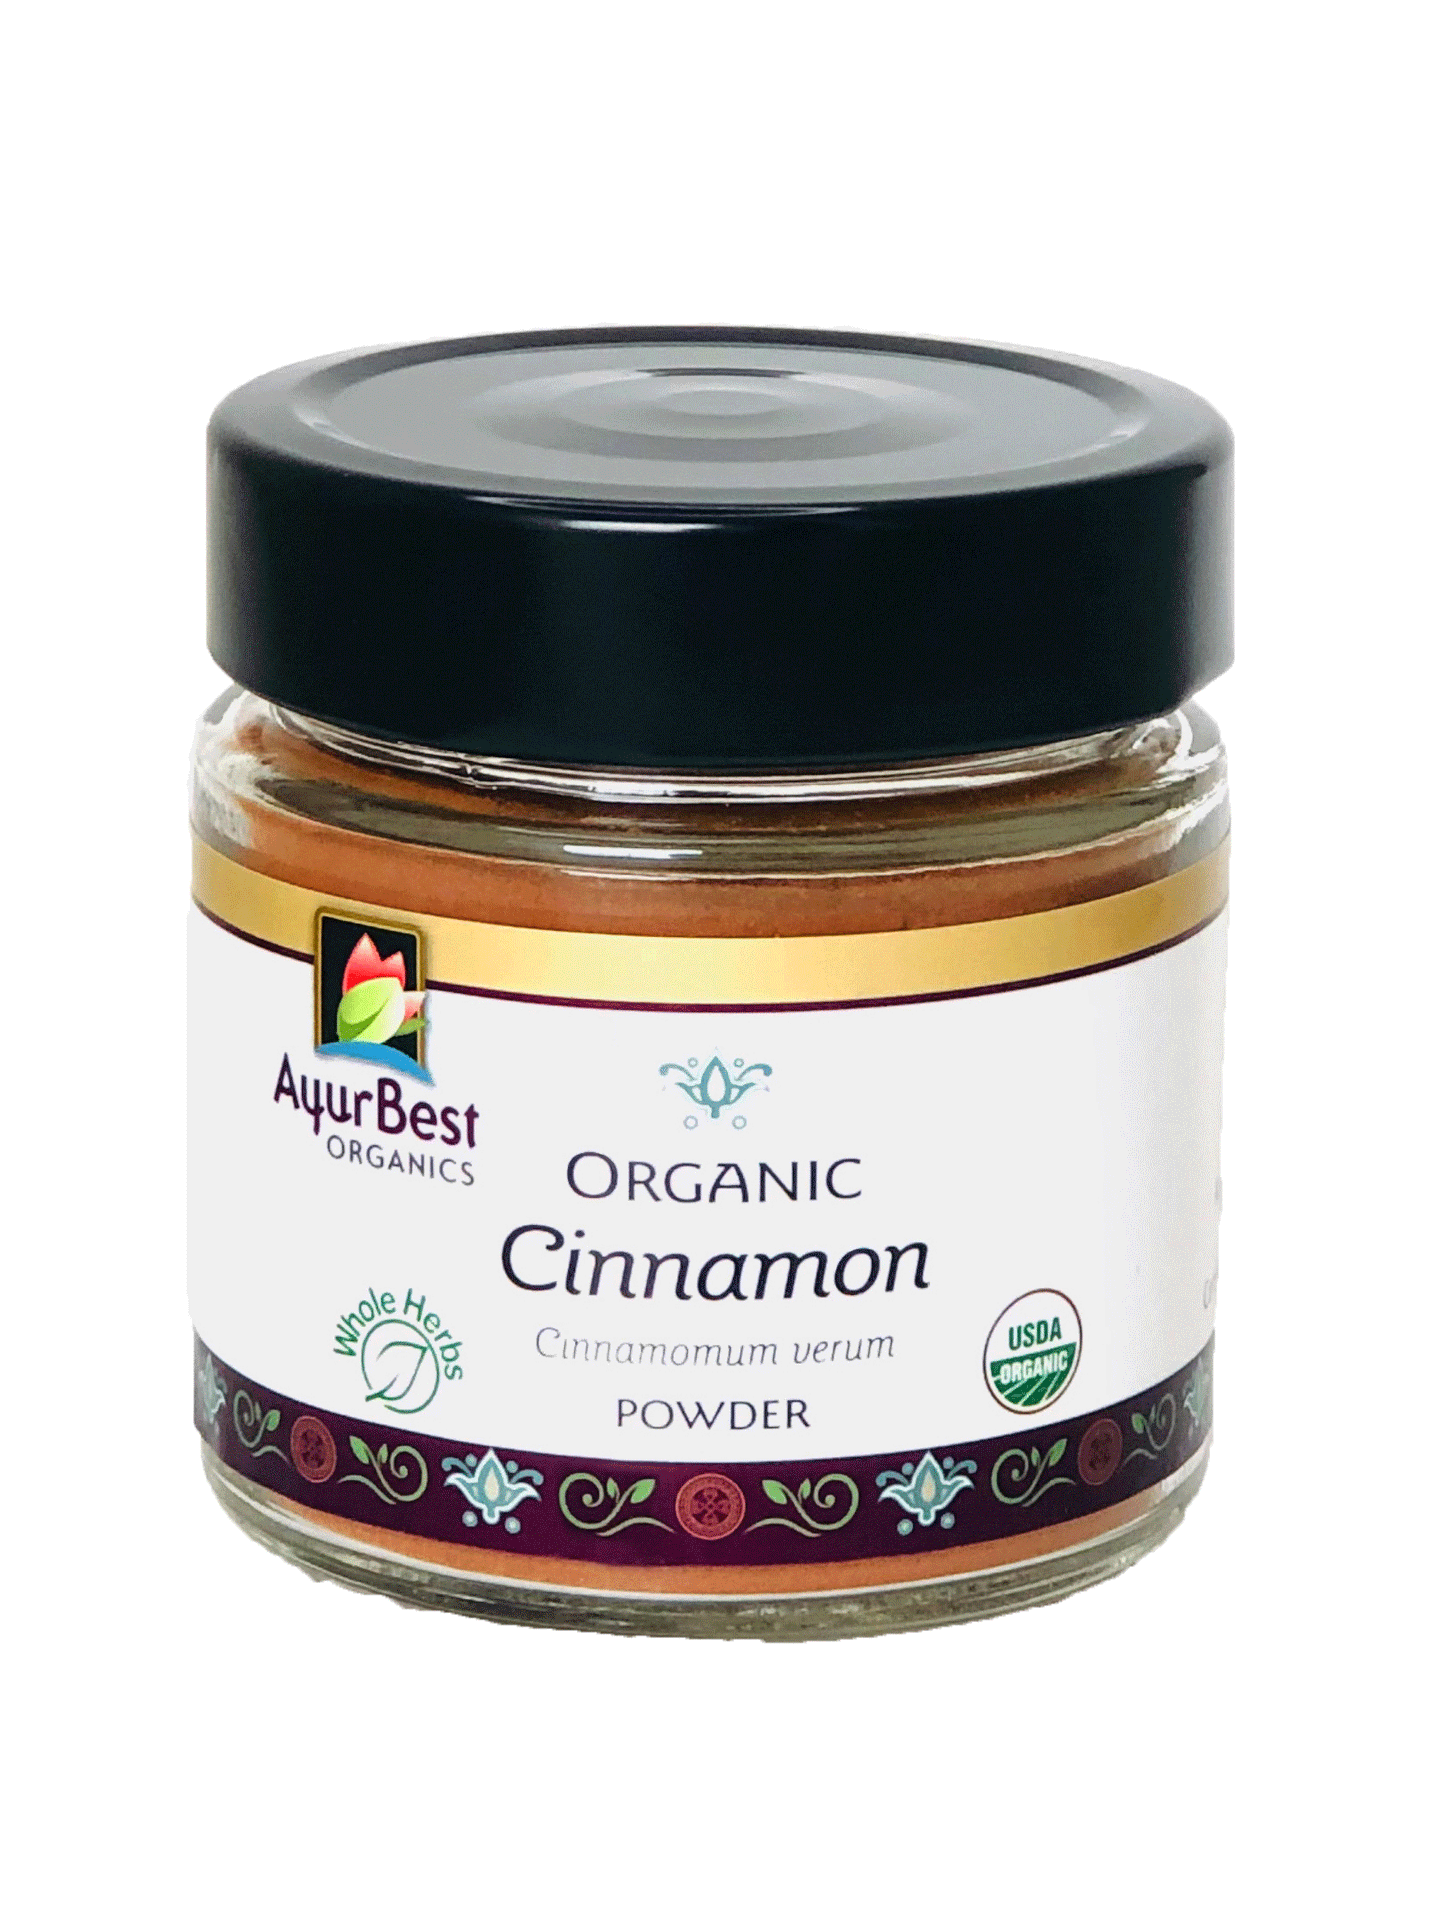 Organic Cinnamon Powder 3.4oz Jar packed in USA.